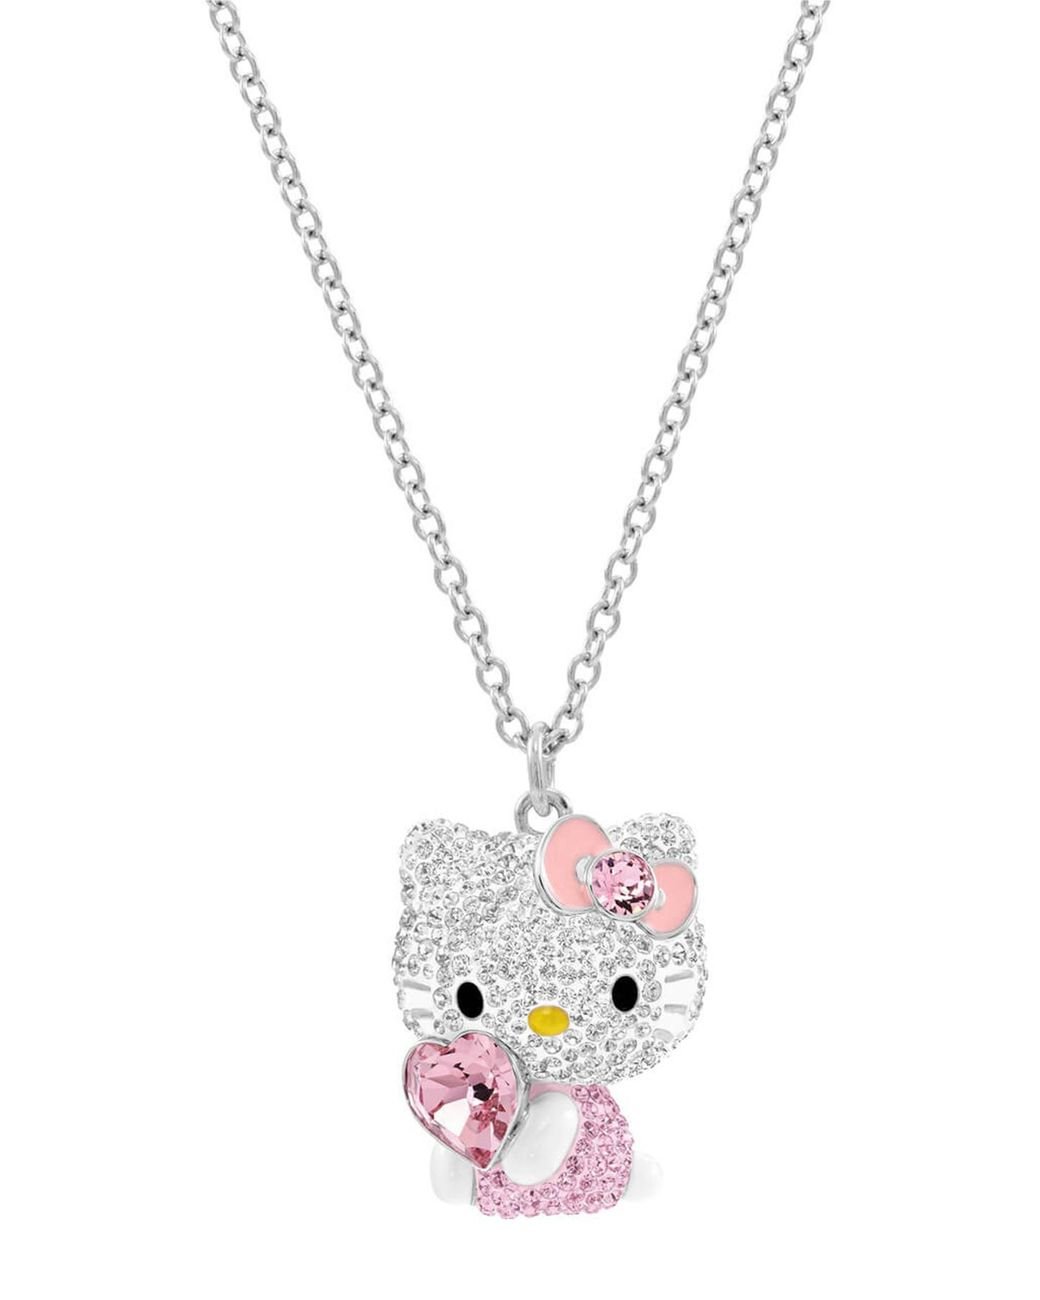 Swarovski Swarovski Sparkling Dance Heart Necklace, Pink, Rhodium plated  5465284 - Morré Lyons Jewelers